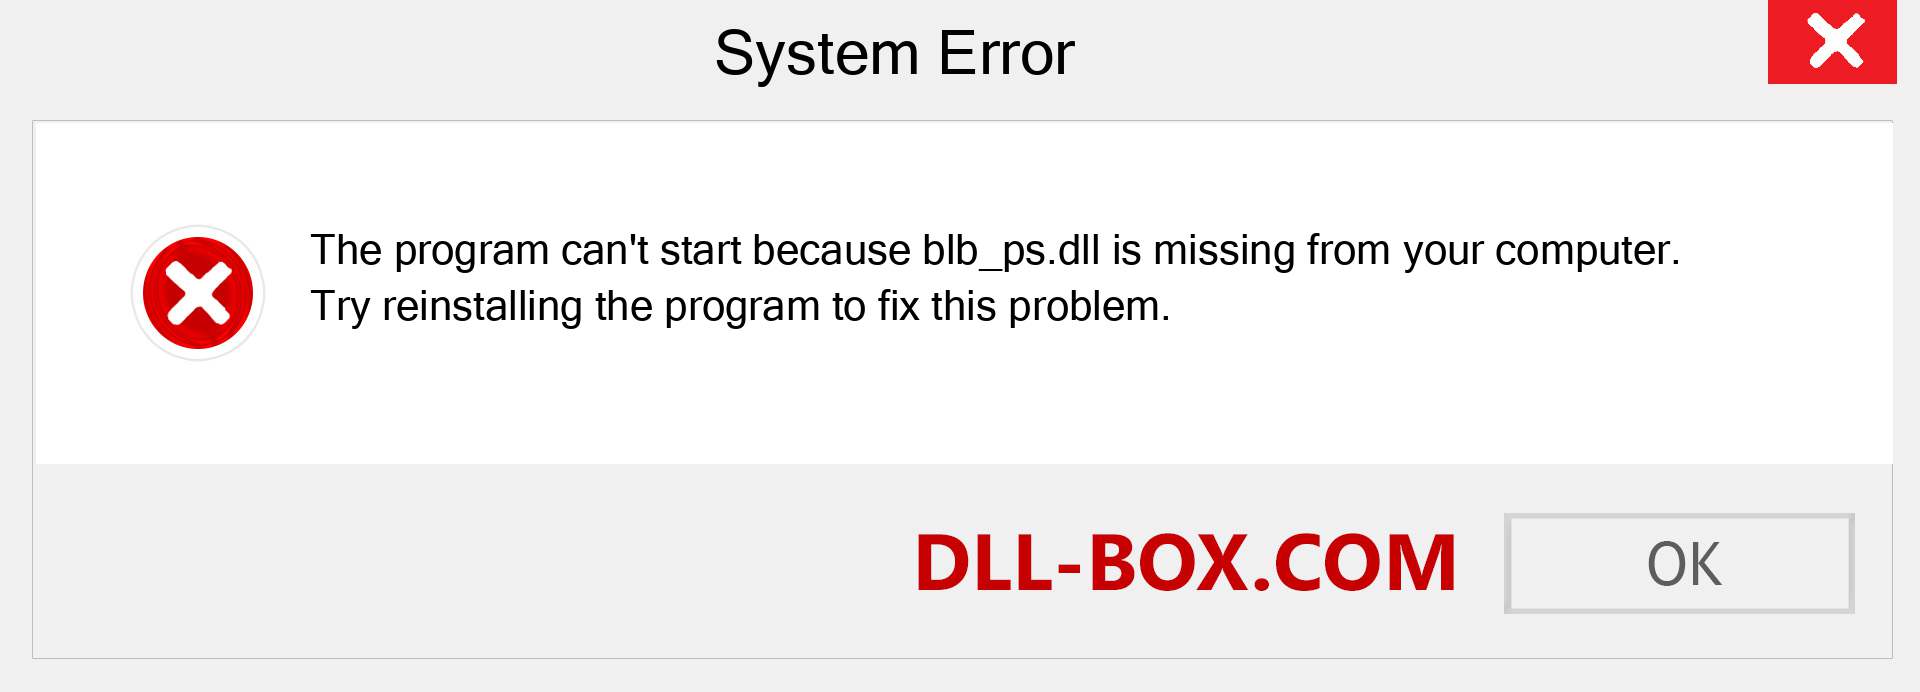  blb_ps.dll file is missing?. Download for Windows 7, 8, 10 - Fix  blb_ps dll Missing Error on Windows, photos, images